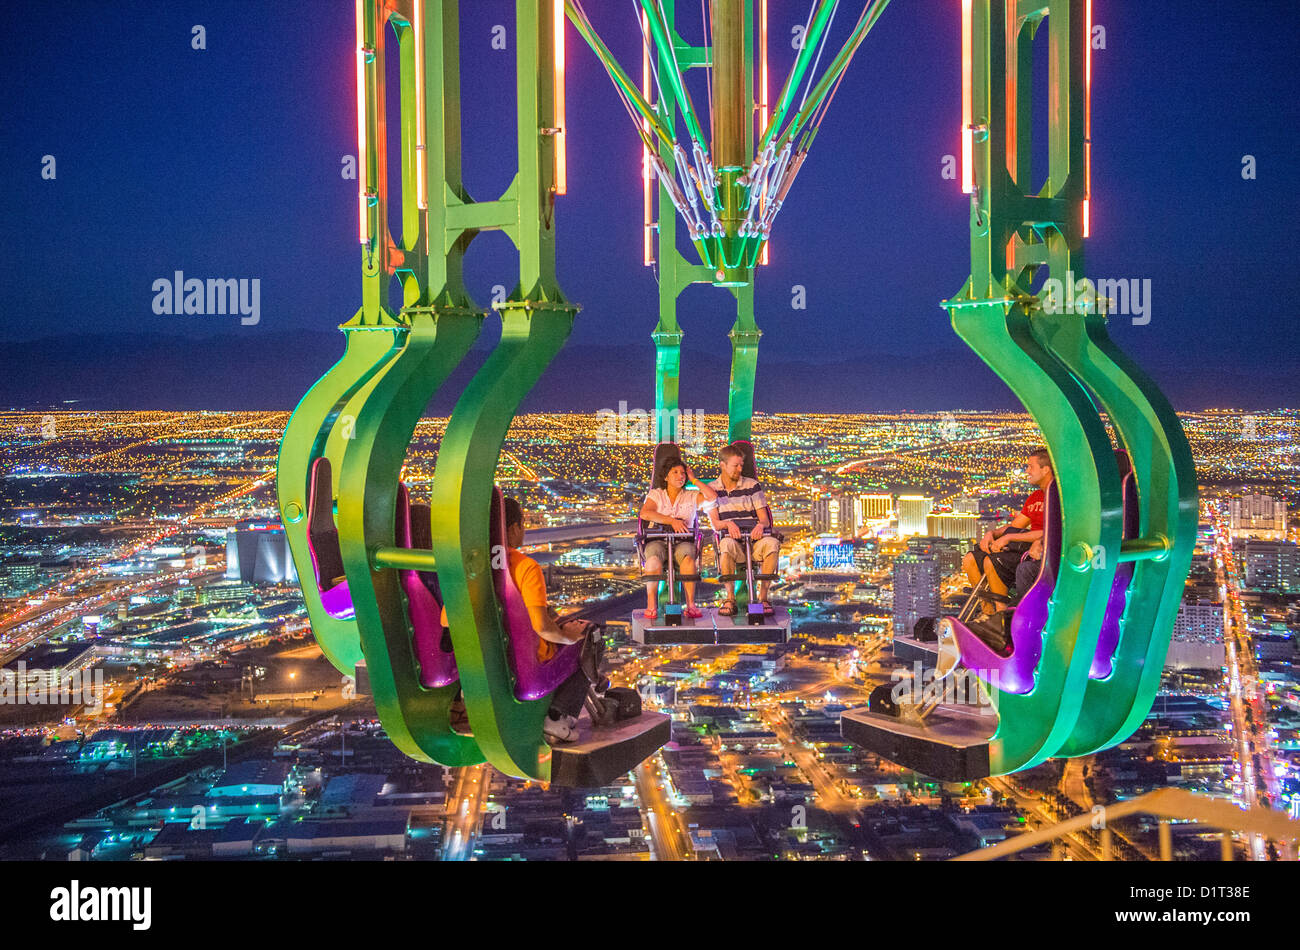 Adrenaline at Las Vegas Stratosphere Tower Stock Image - Image of night,  adrenaline: 122755291